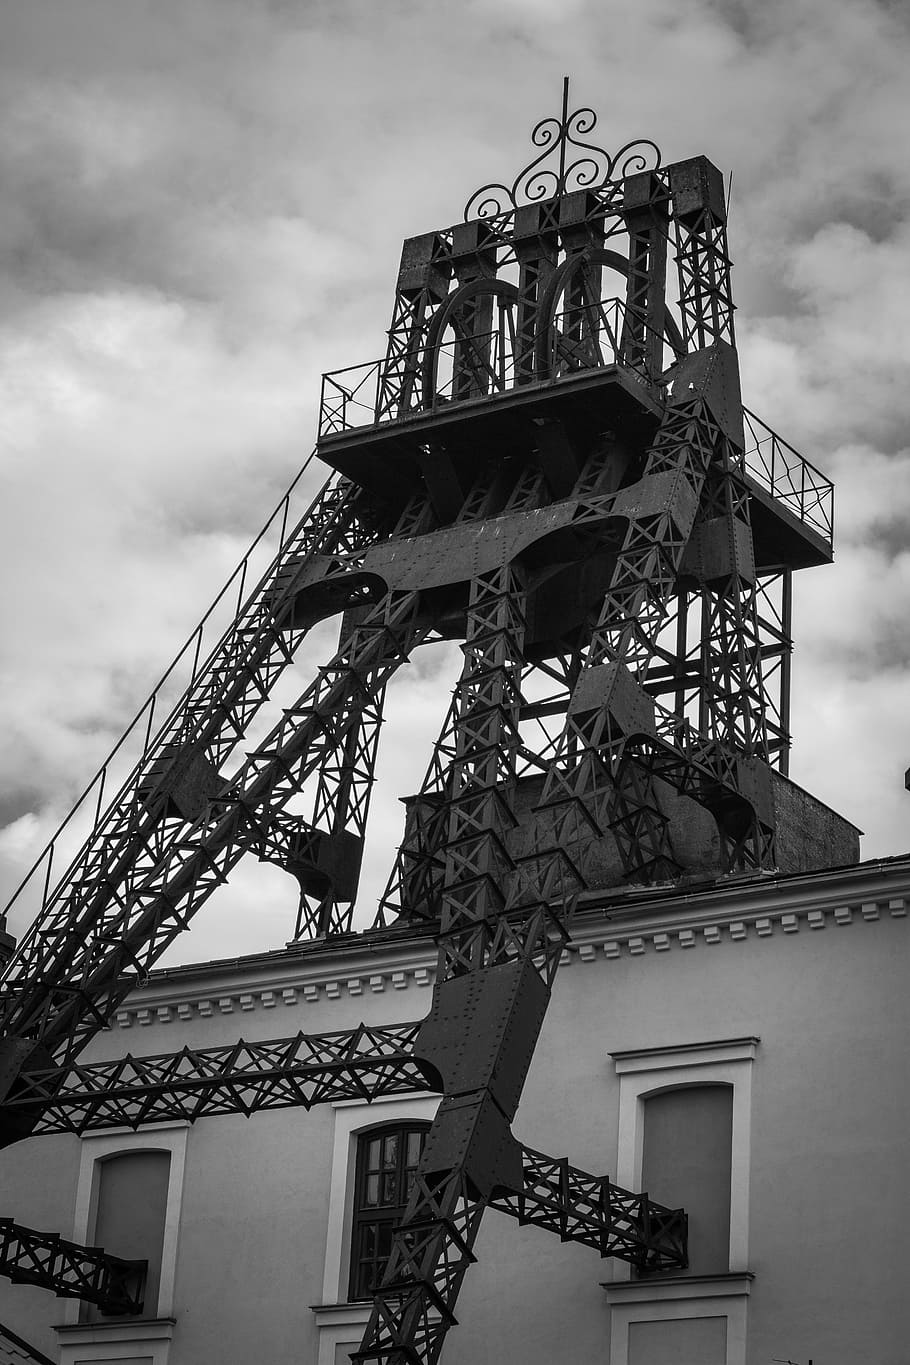 jindřichマイニングタワー, タワー, 抽出, 石炭, 石炭採掘, 雰囲気, 建築, 建物, 場所, 記念碑